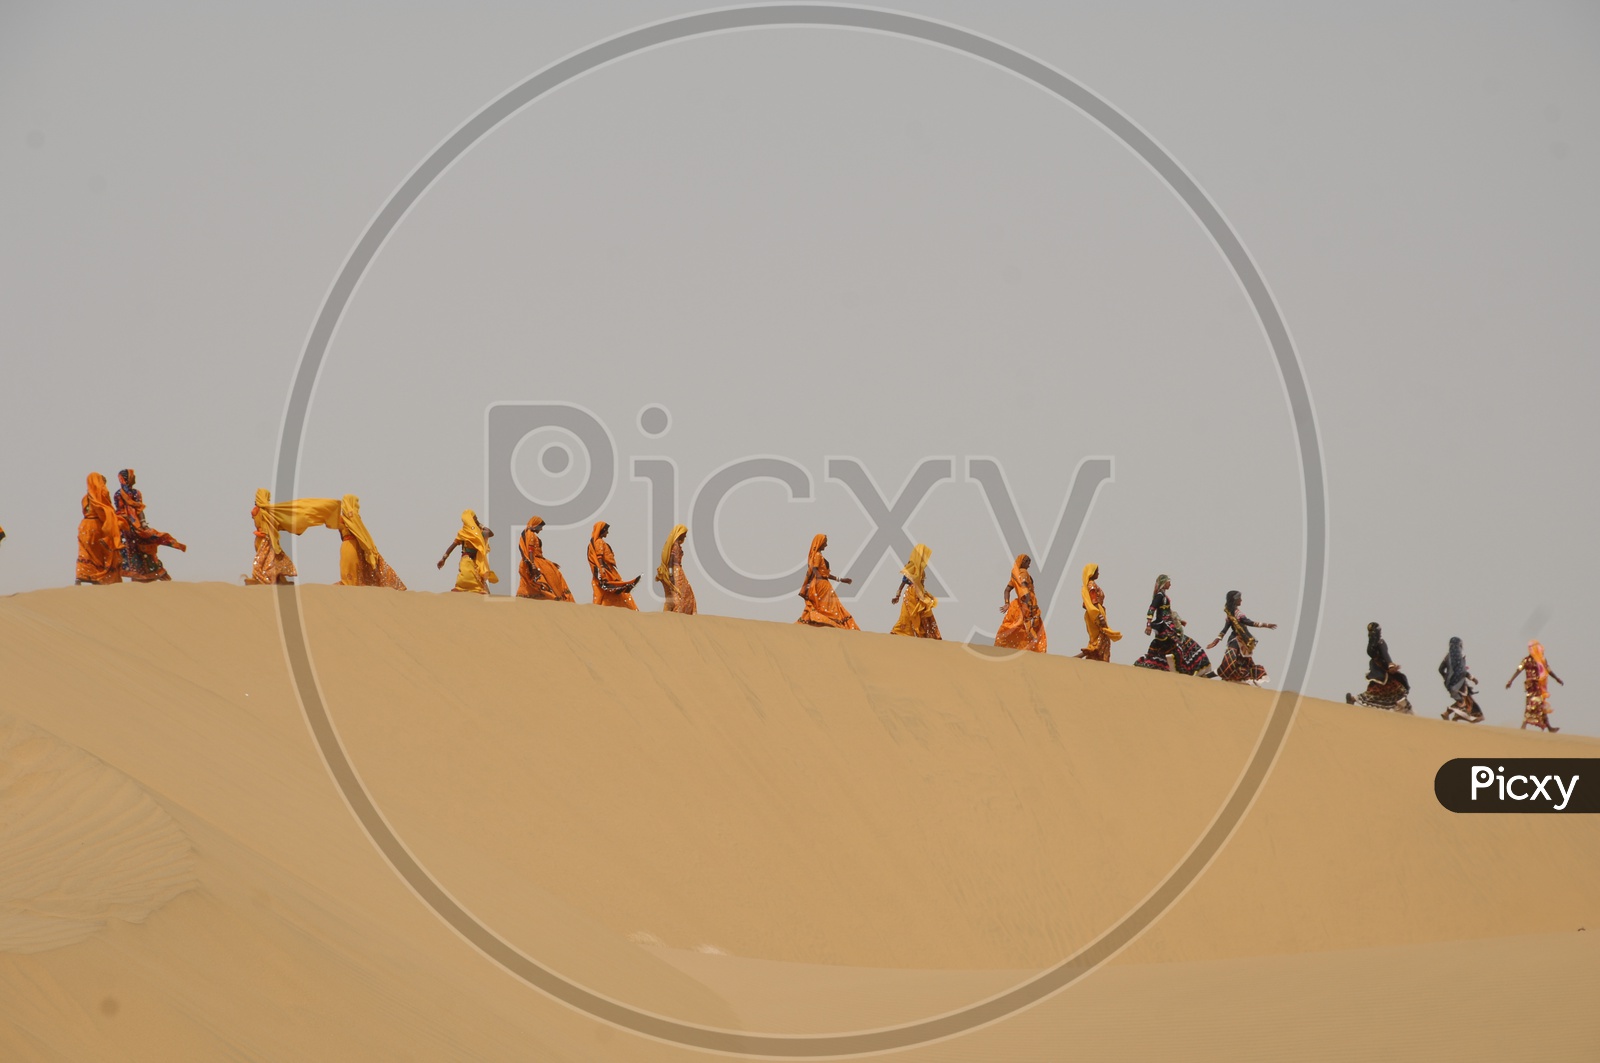 Rajasthani women in a desert